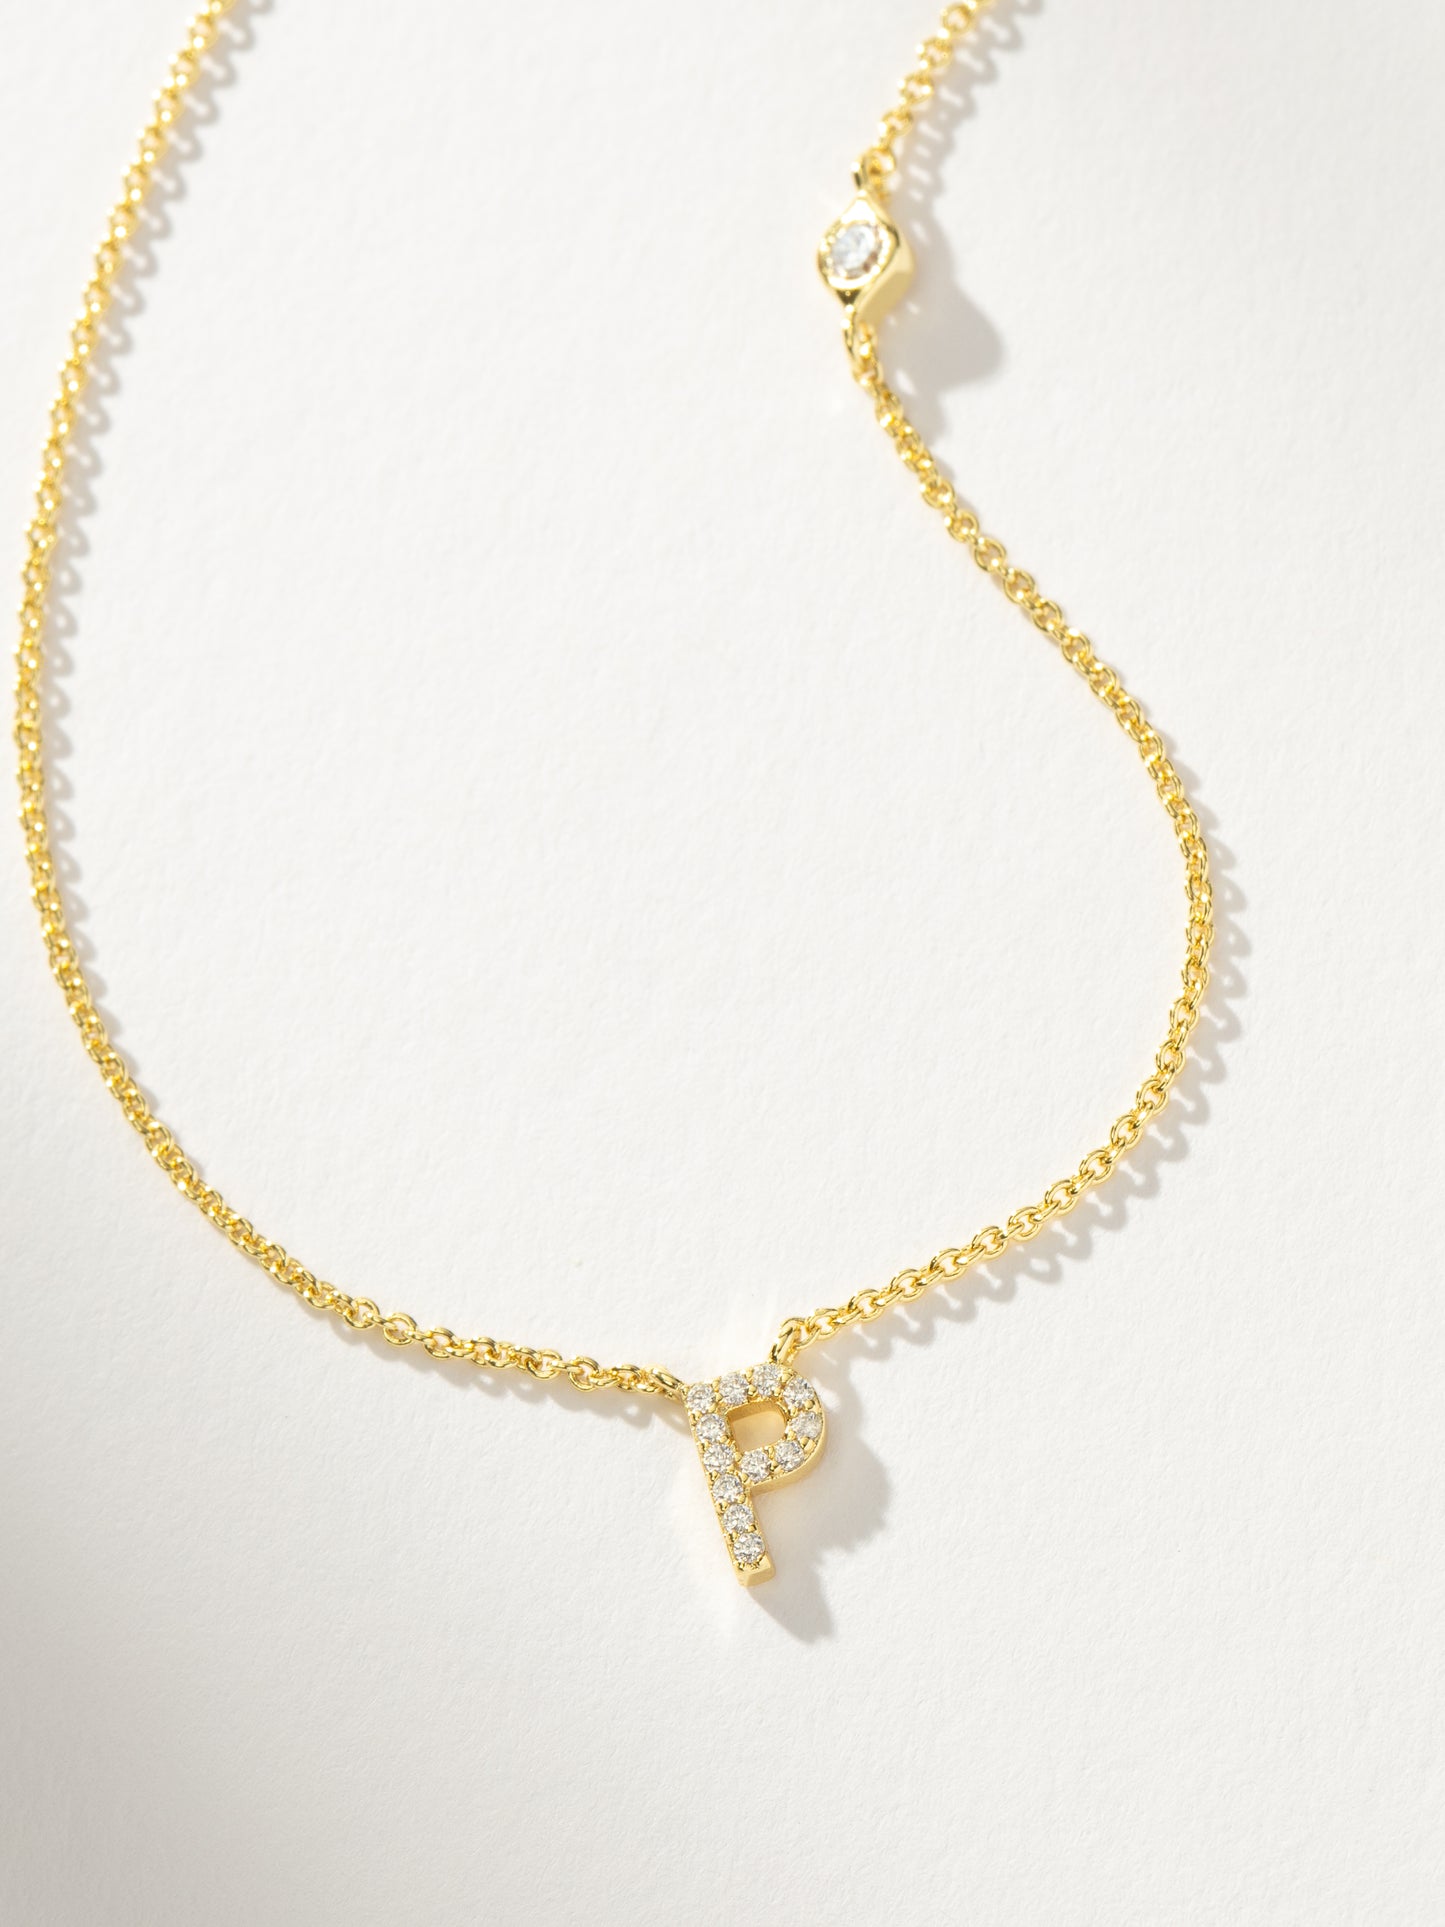 Pavé Initial Necklace | Gold P | Product Detail Image | Uncommon James